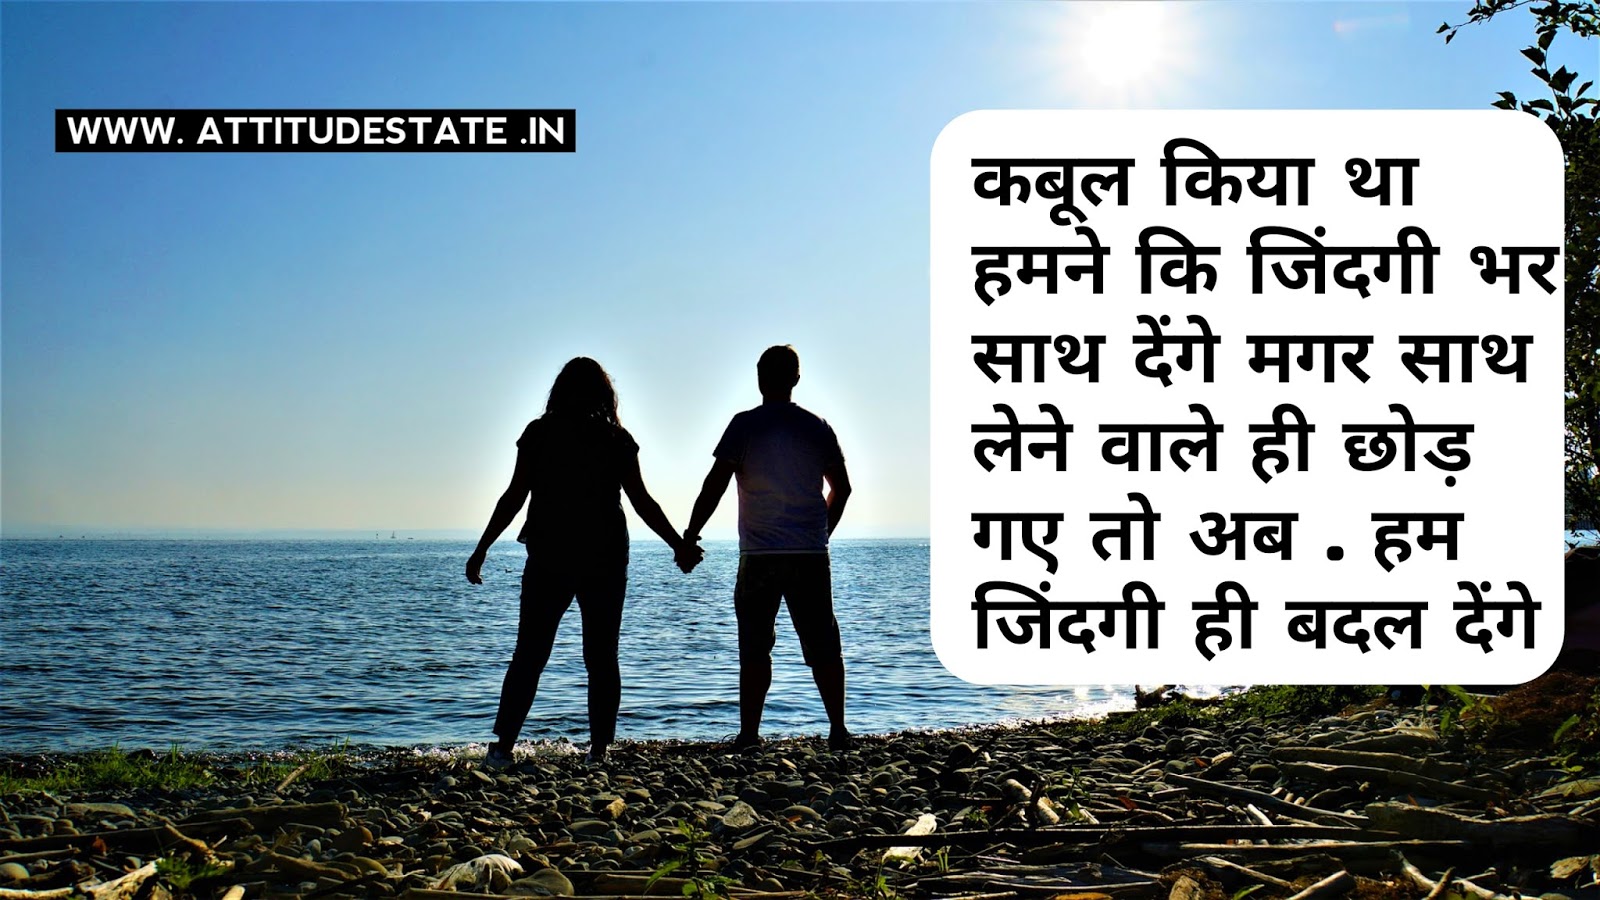 35 Boy Attitude Shayari In Hindi Image Quotes Status | Attitudestate - 2023